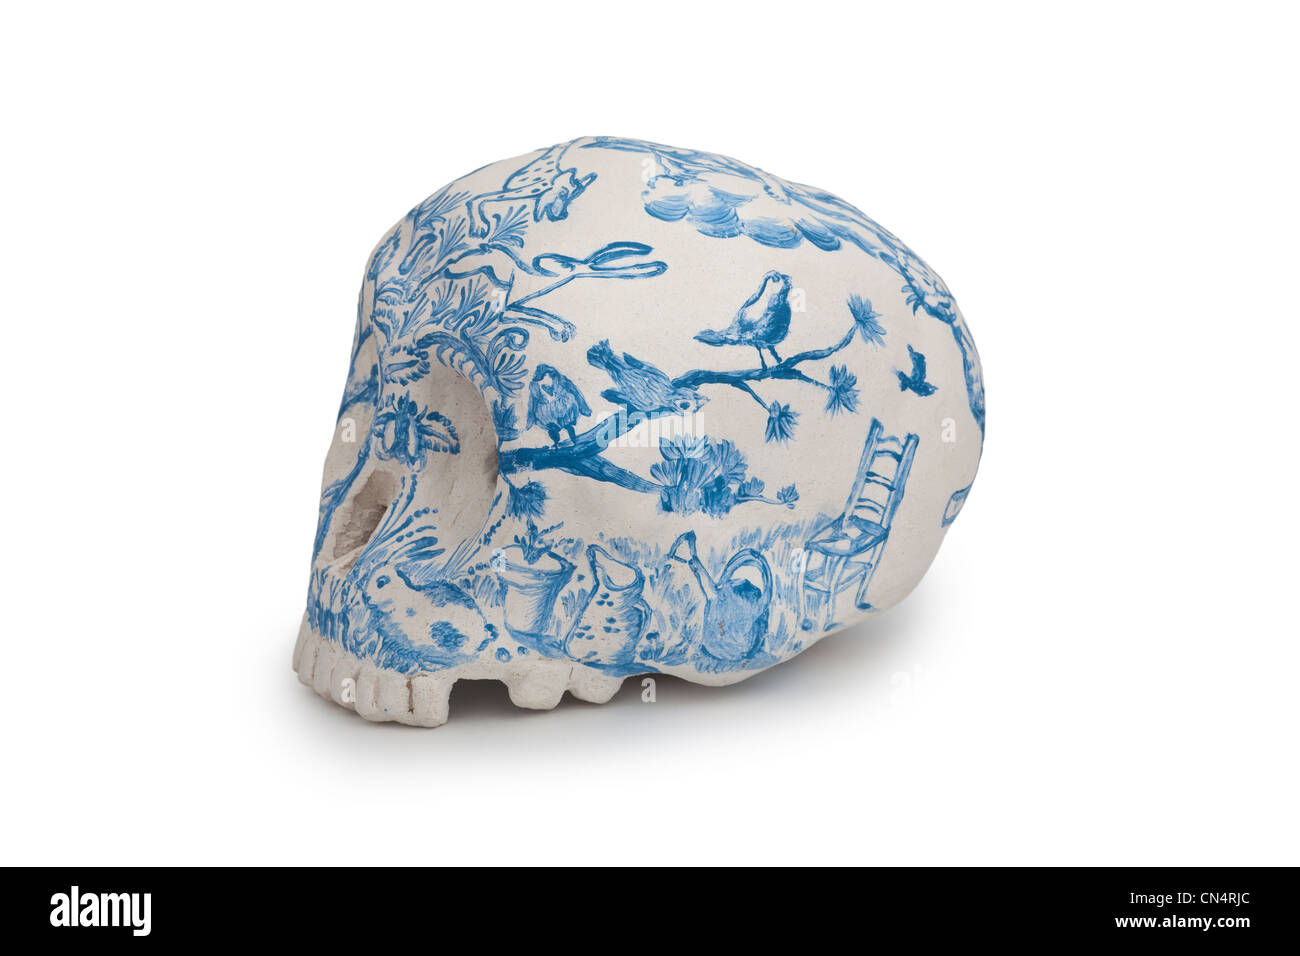 Un teschio umano scultura a forma di Jacques gallone, ceramista. Sculture en forme de crâne humain du céramiste Jacques gallone. Foto Stock